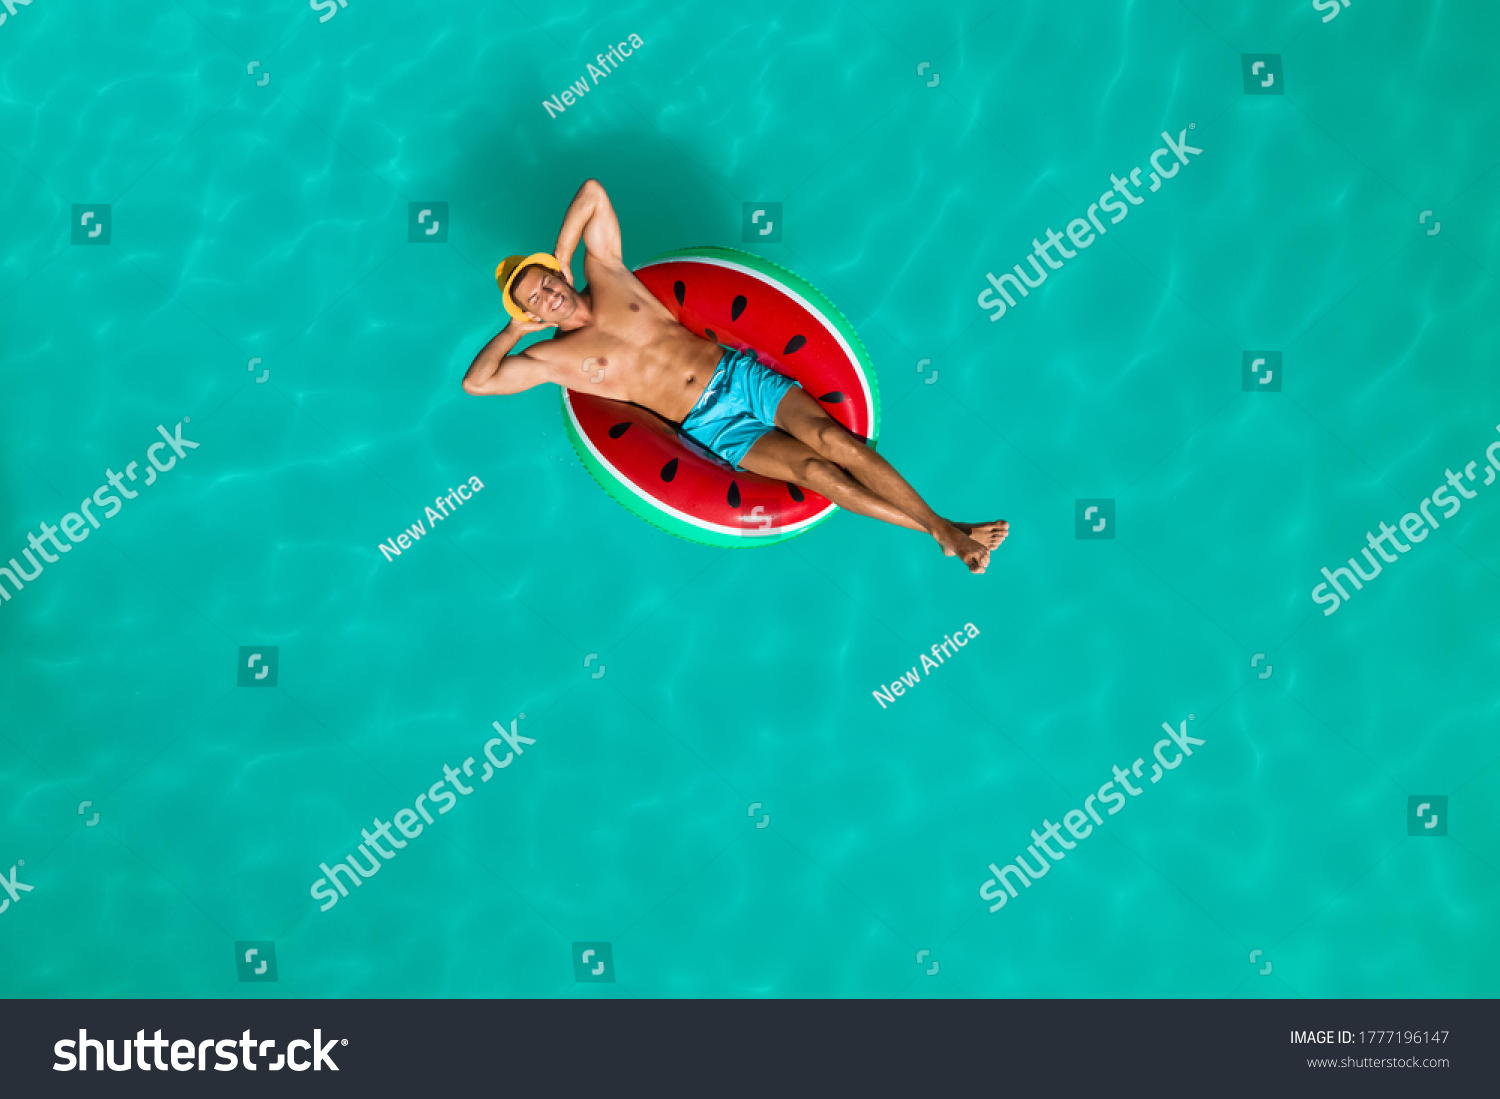 169,109 Man in pool Images, Stock Photos & Vectors | Shutterstock